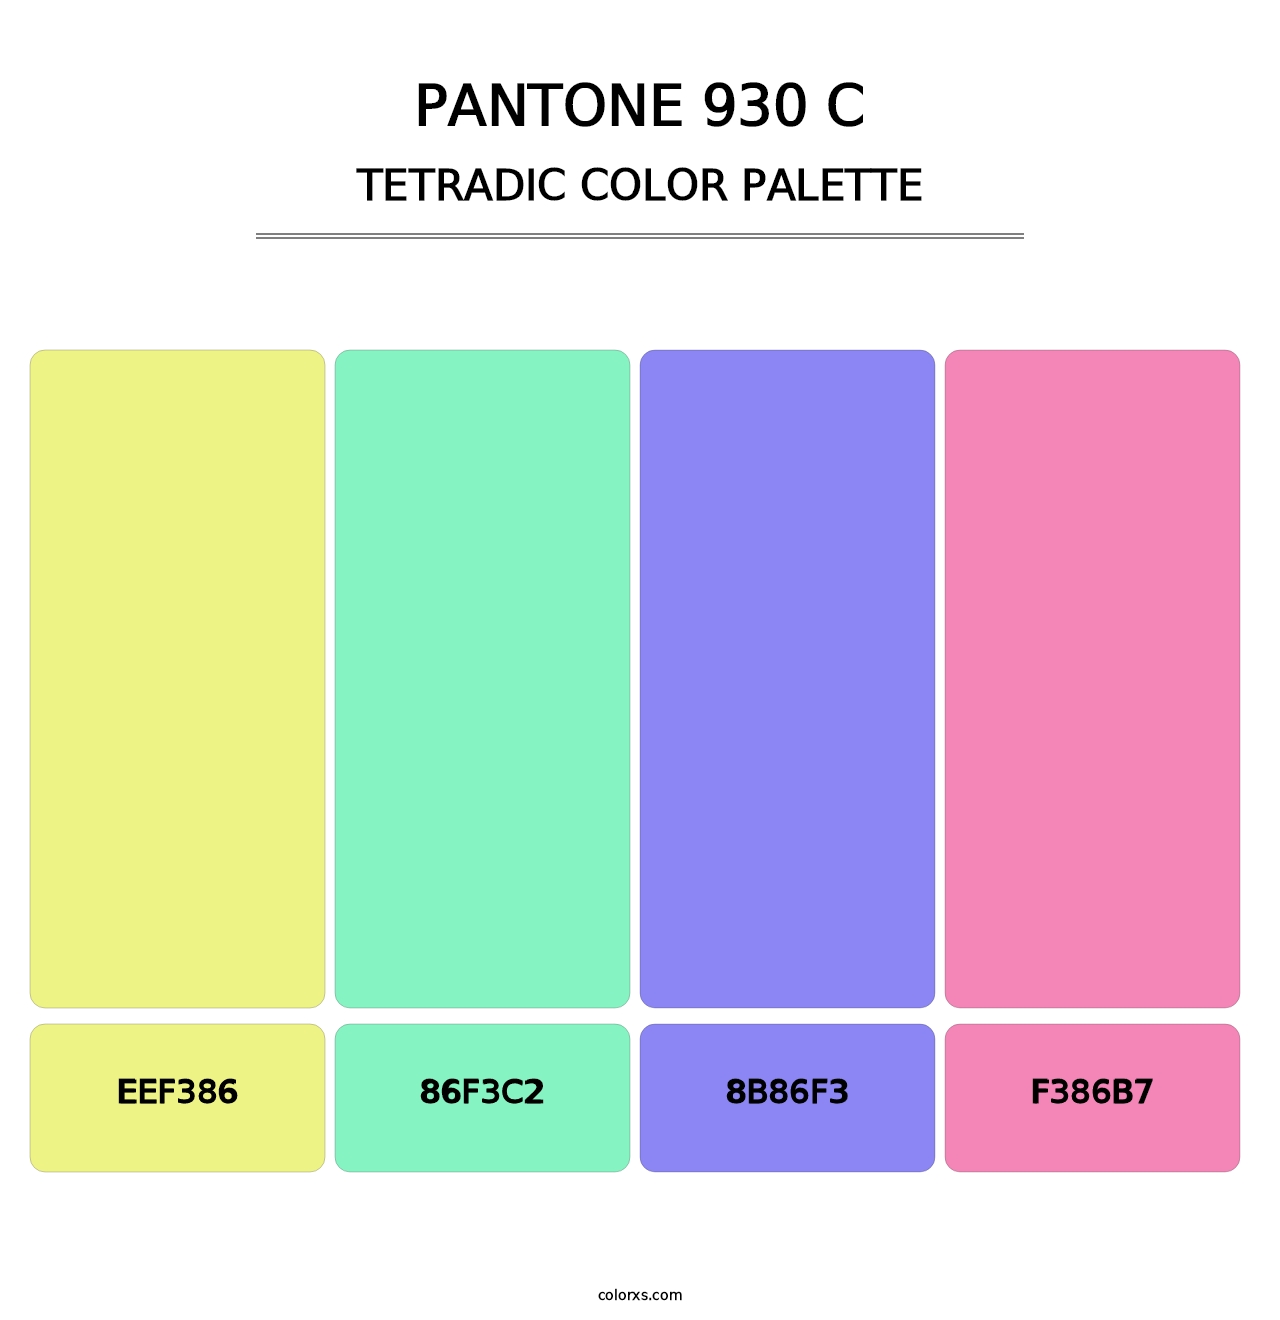 PANTONE 930 C - Tetradic Color Palette